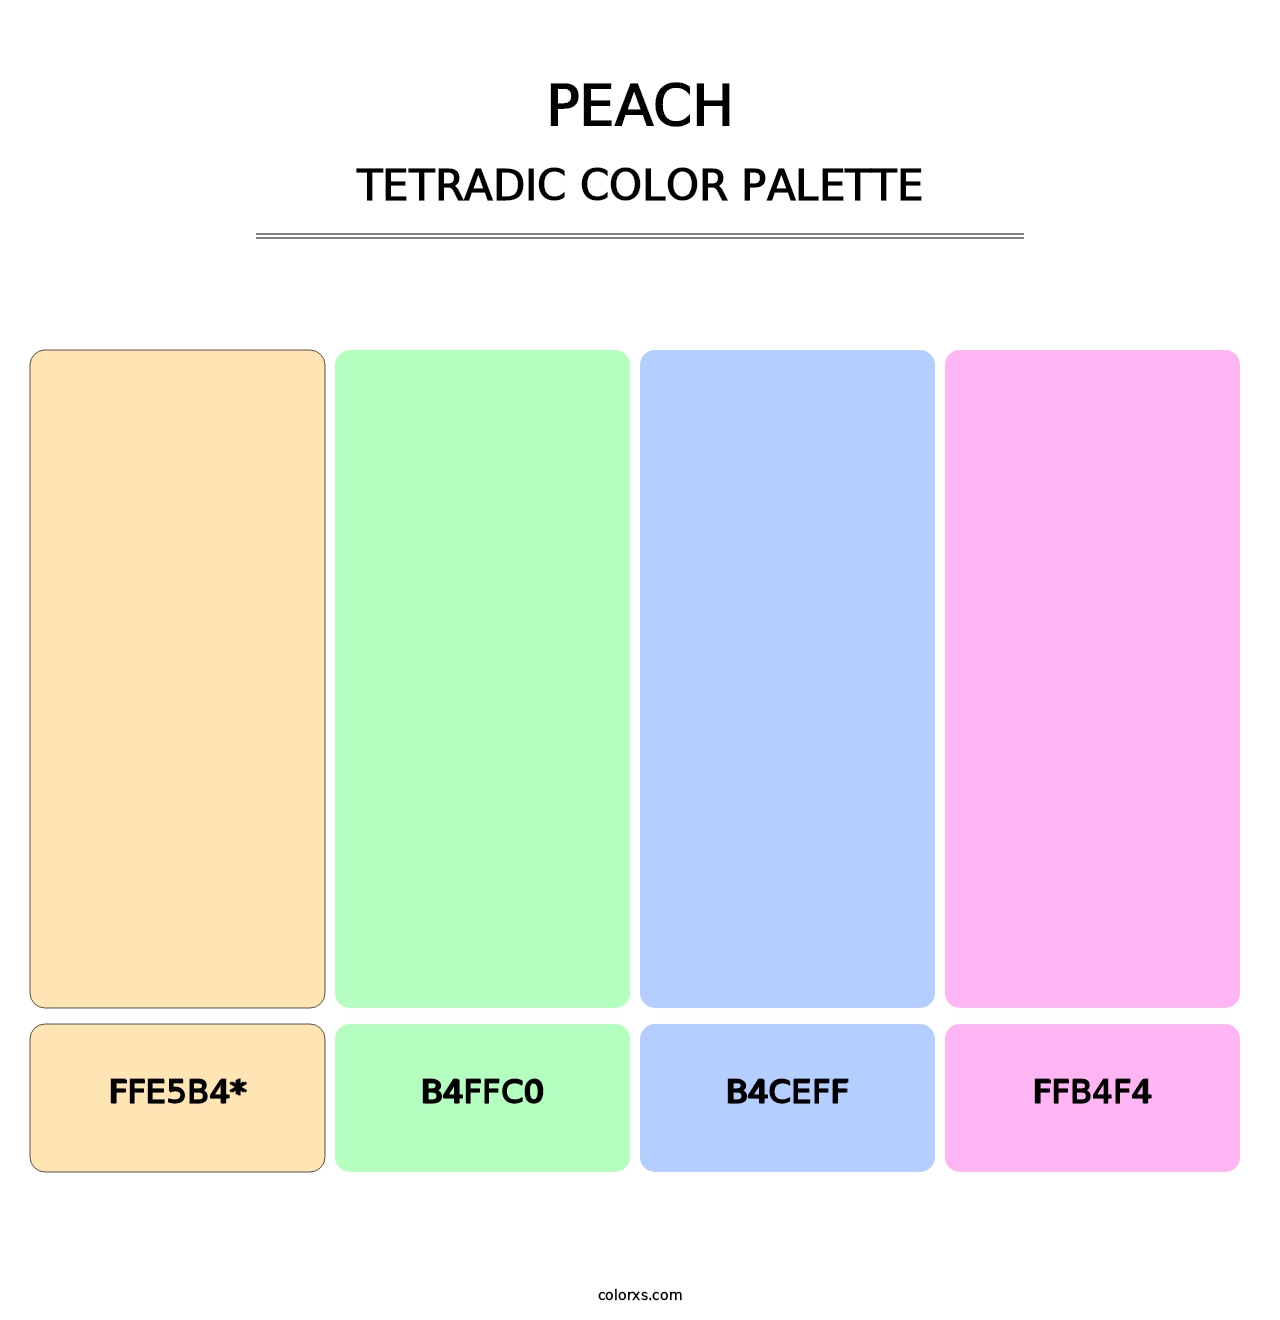 Peach - Tetradic Color Palette